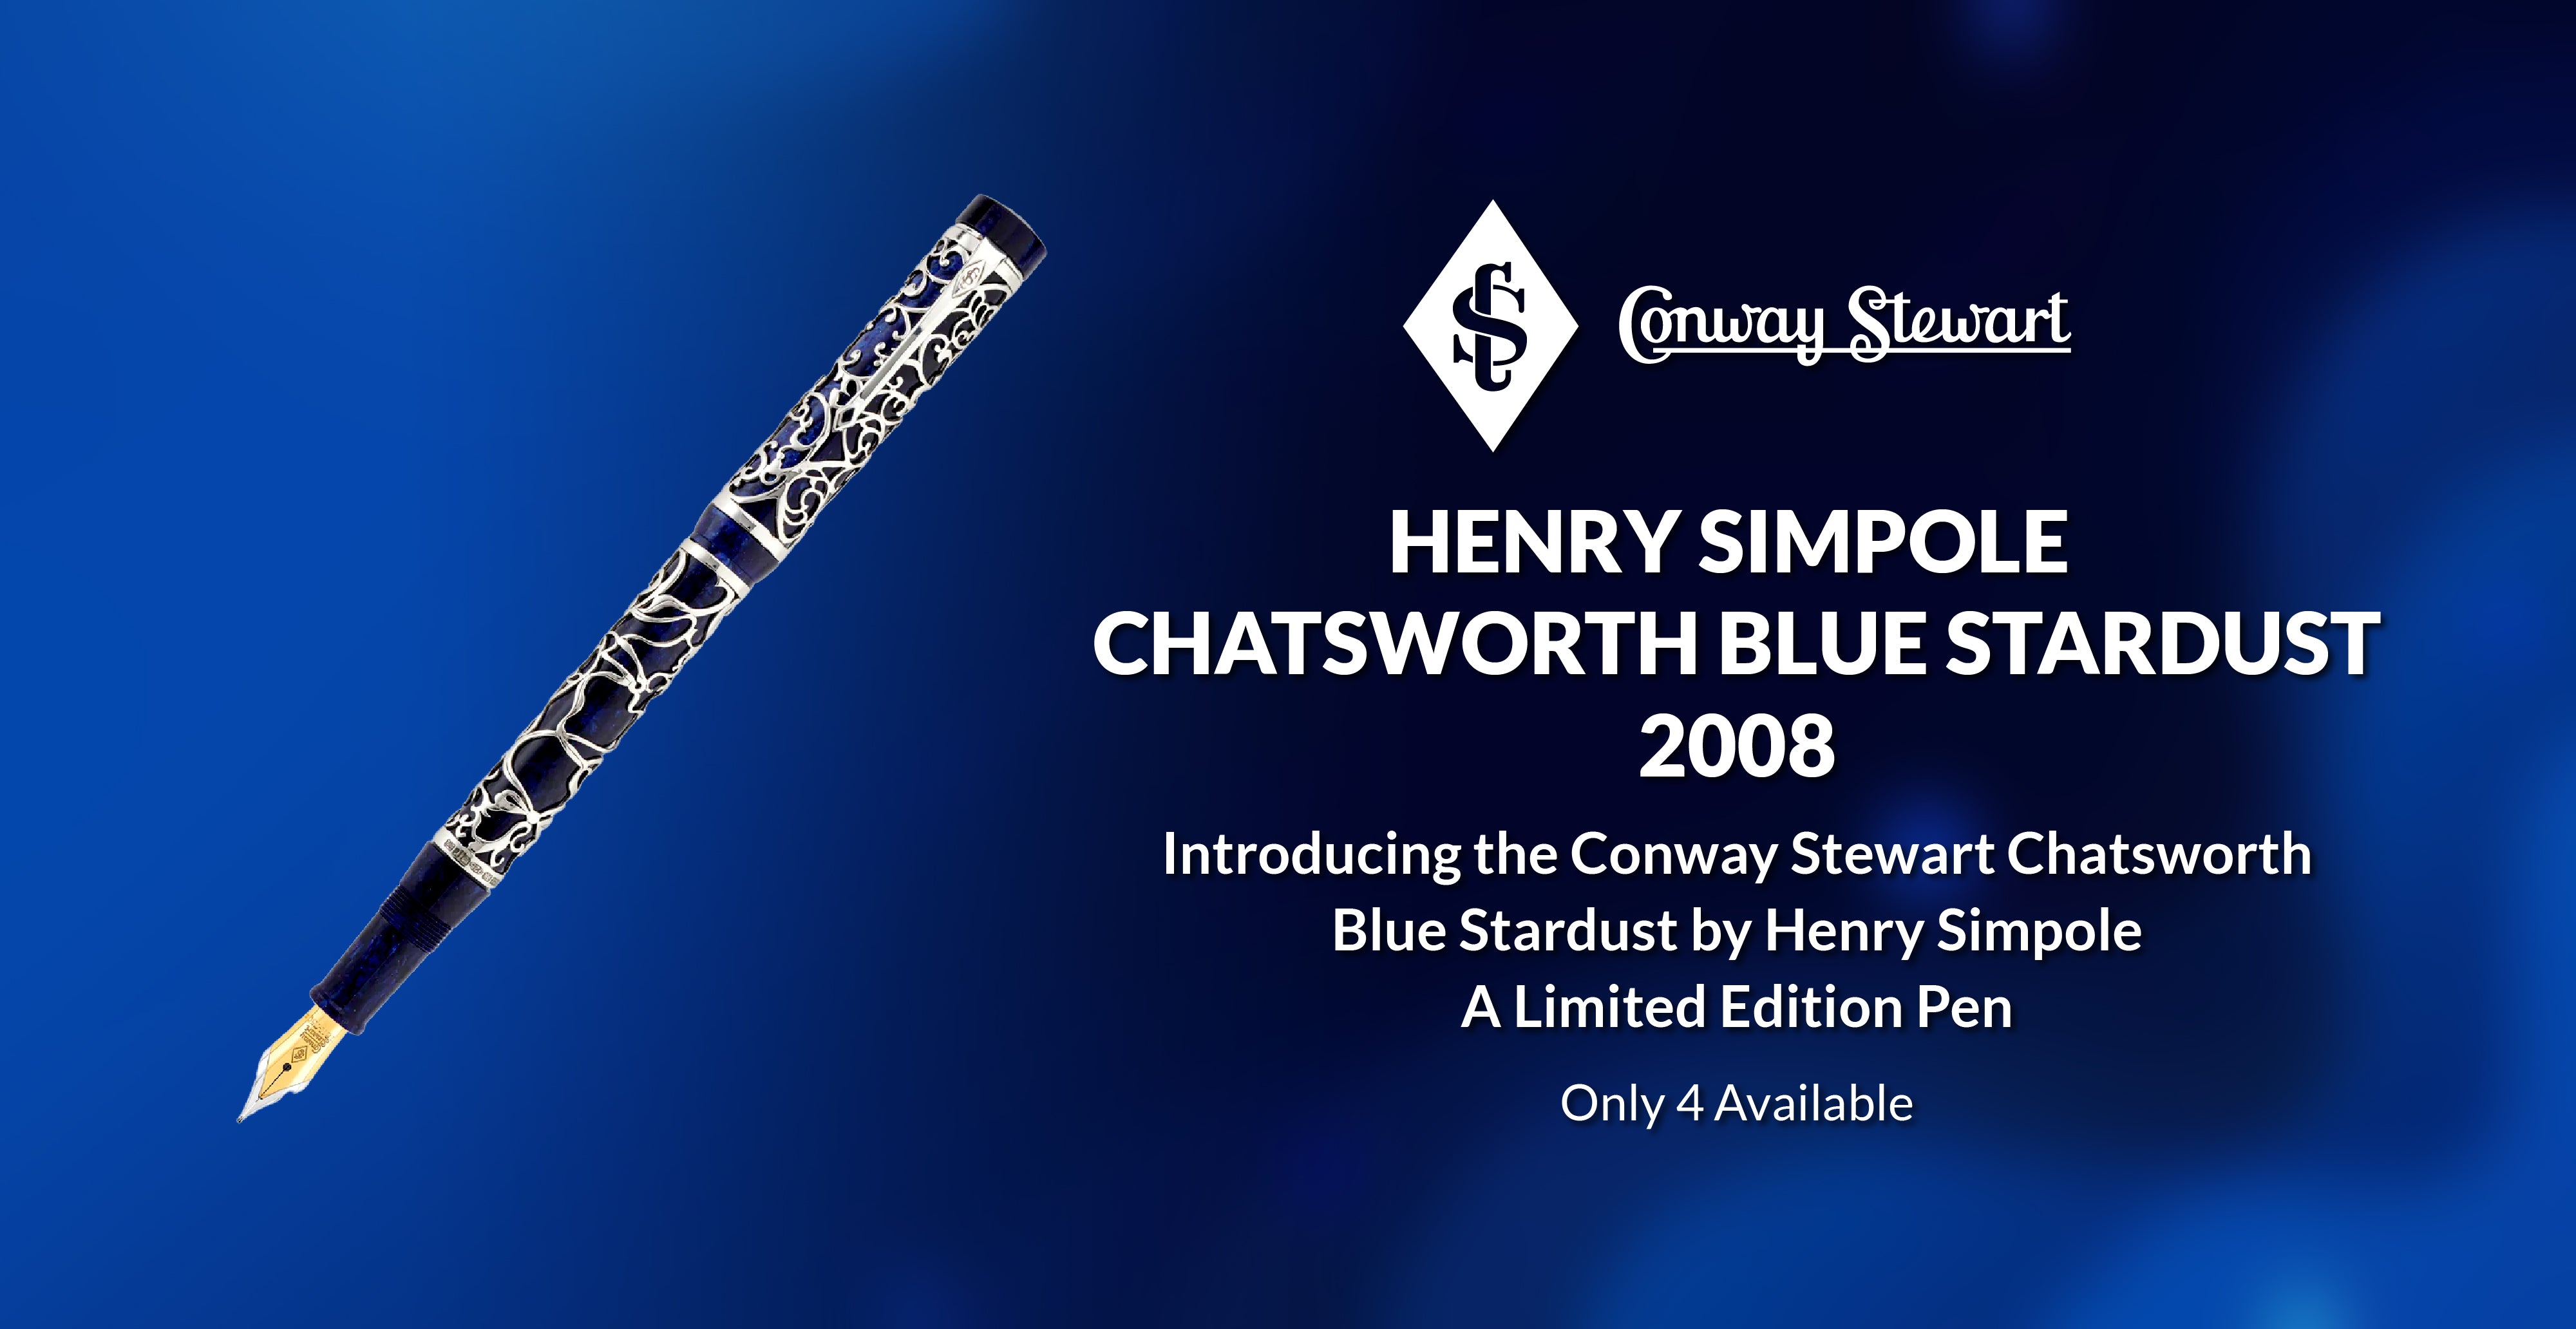 Henry Simpole Chatsworth Blue Stardust, 2008